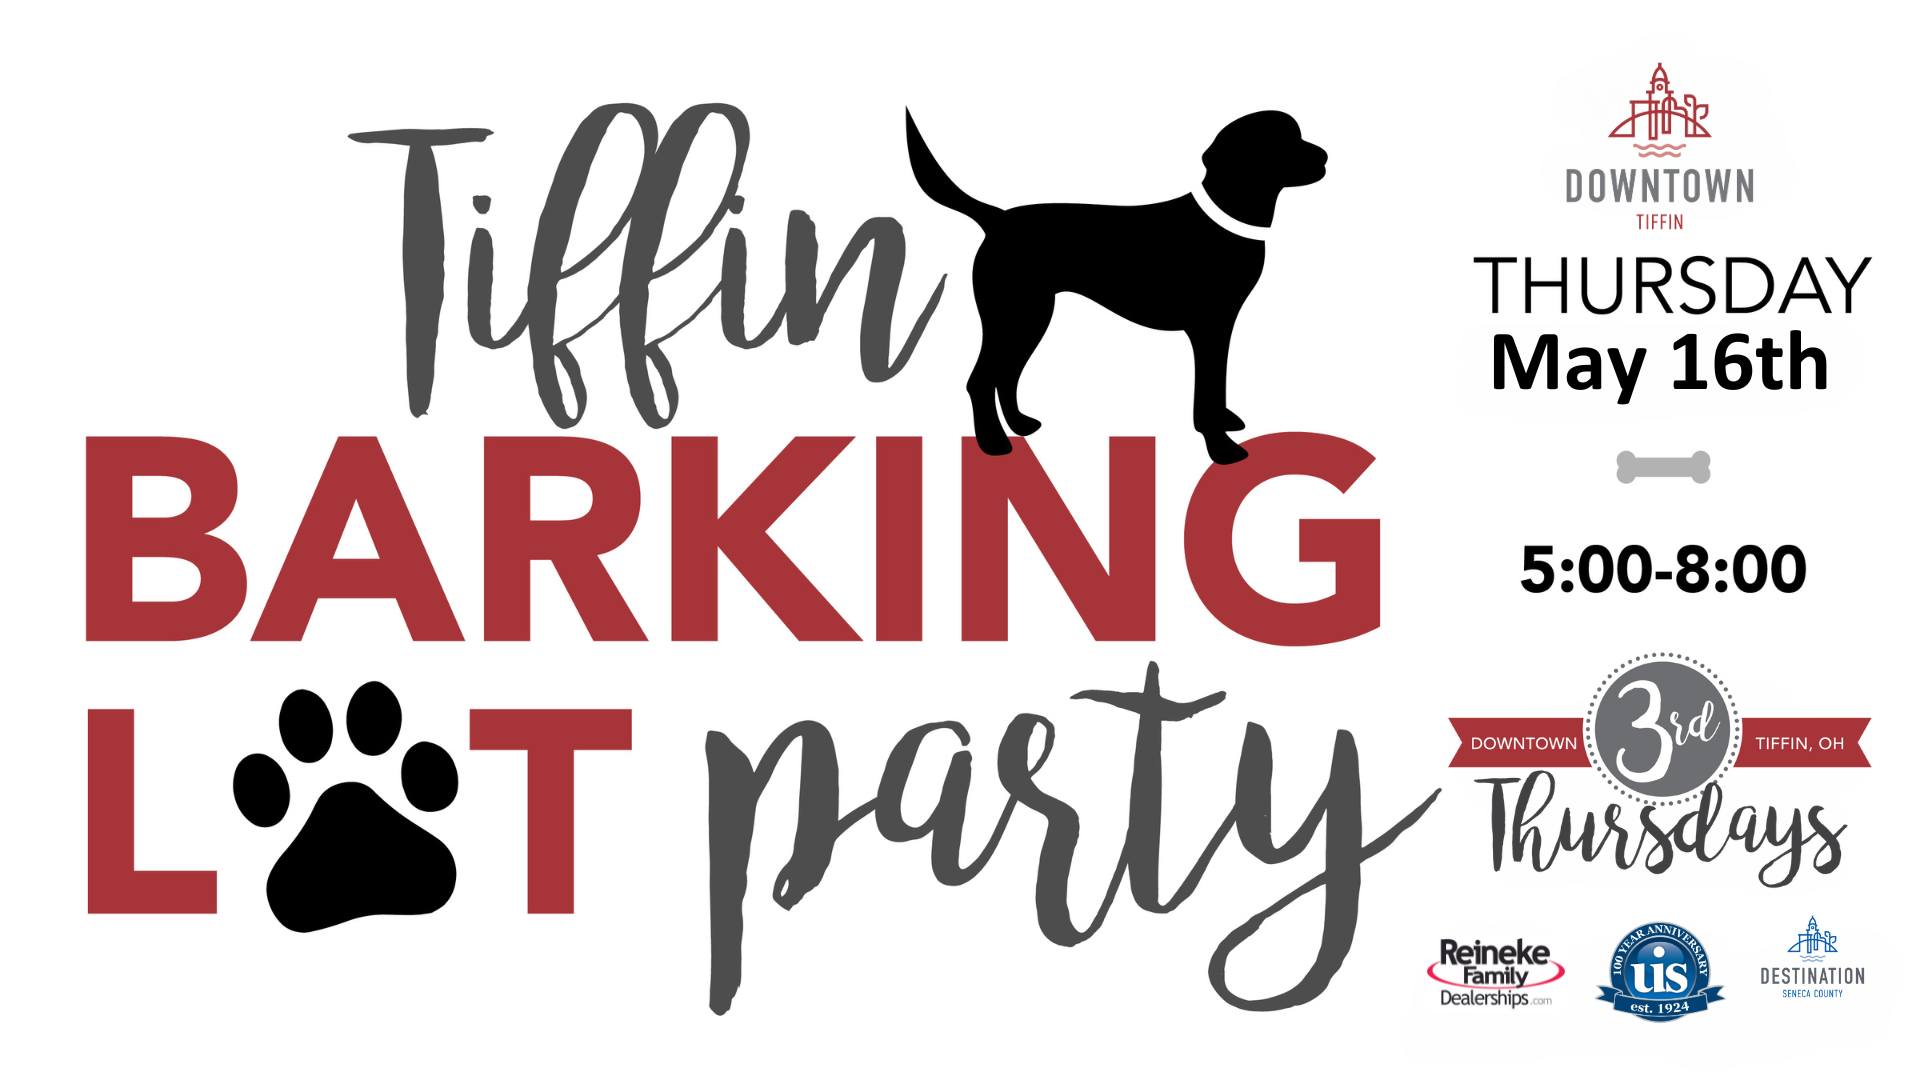 Barking Lot Party - Third Thursday